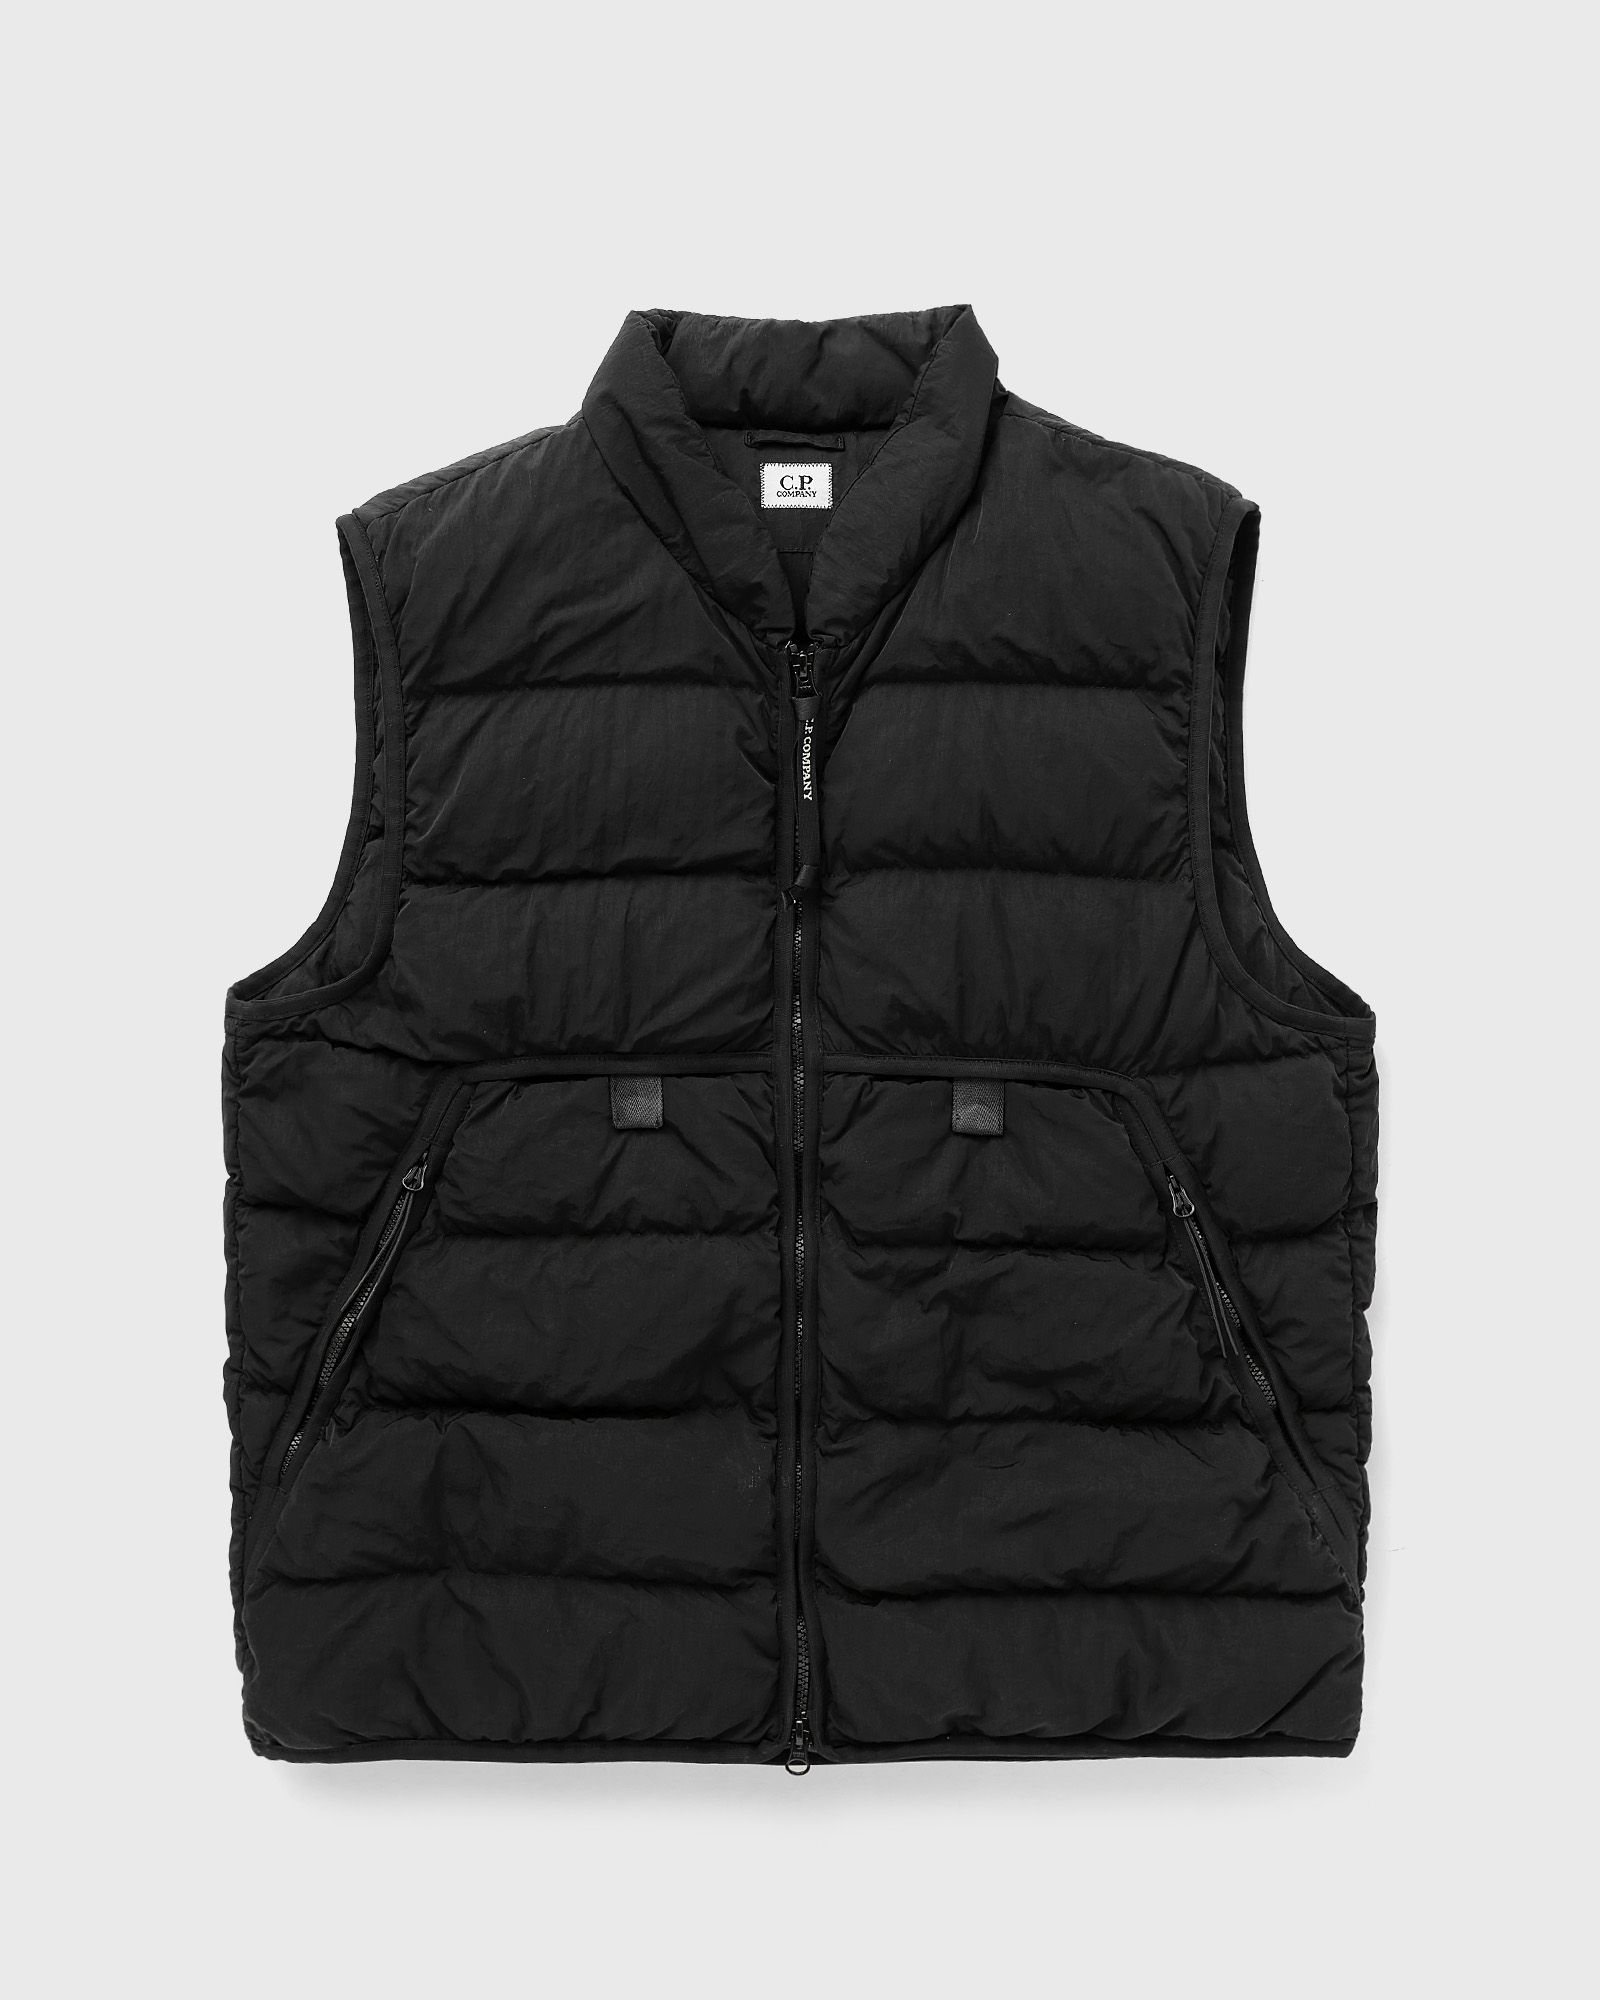 C.P. Company - outerwear - vest men vests black in größe:m